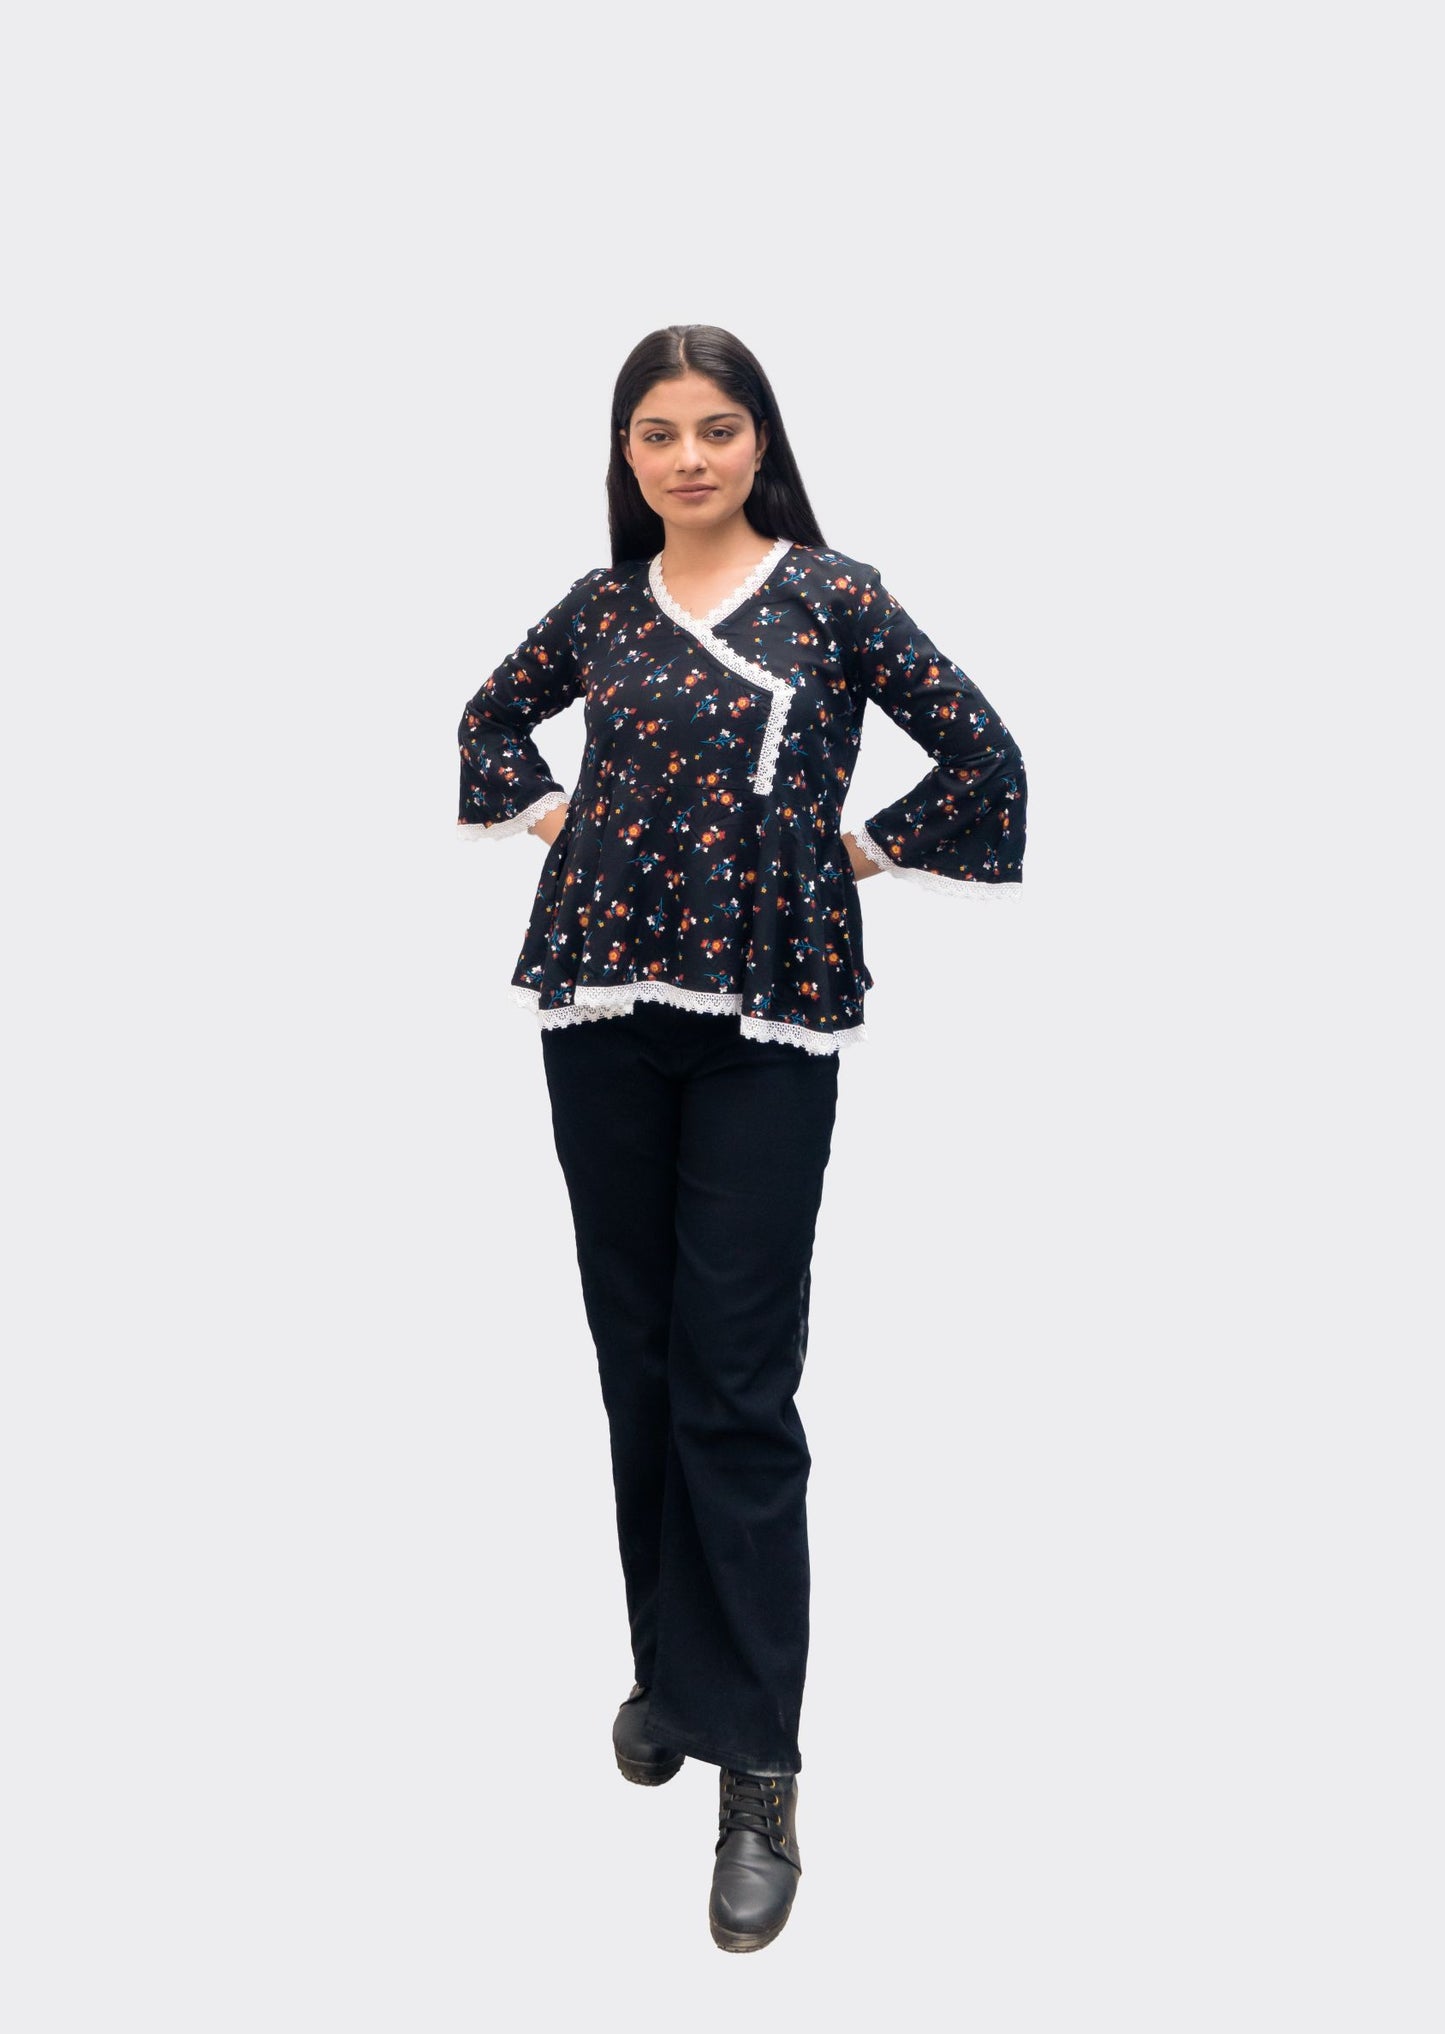 "Anikrriti's Elegant Black Peplum Top: A Stylish and Flattering Addition to Your Wardrobe"